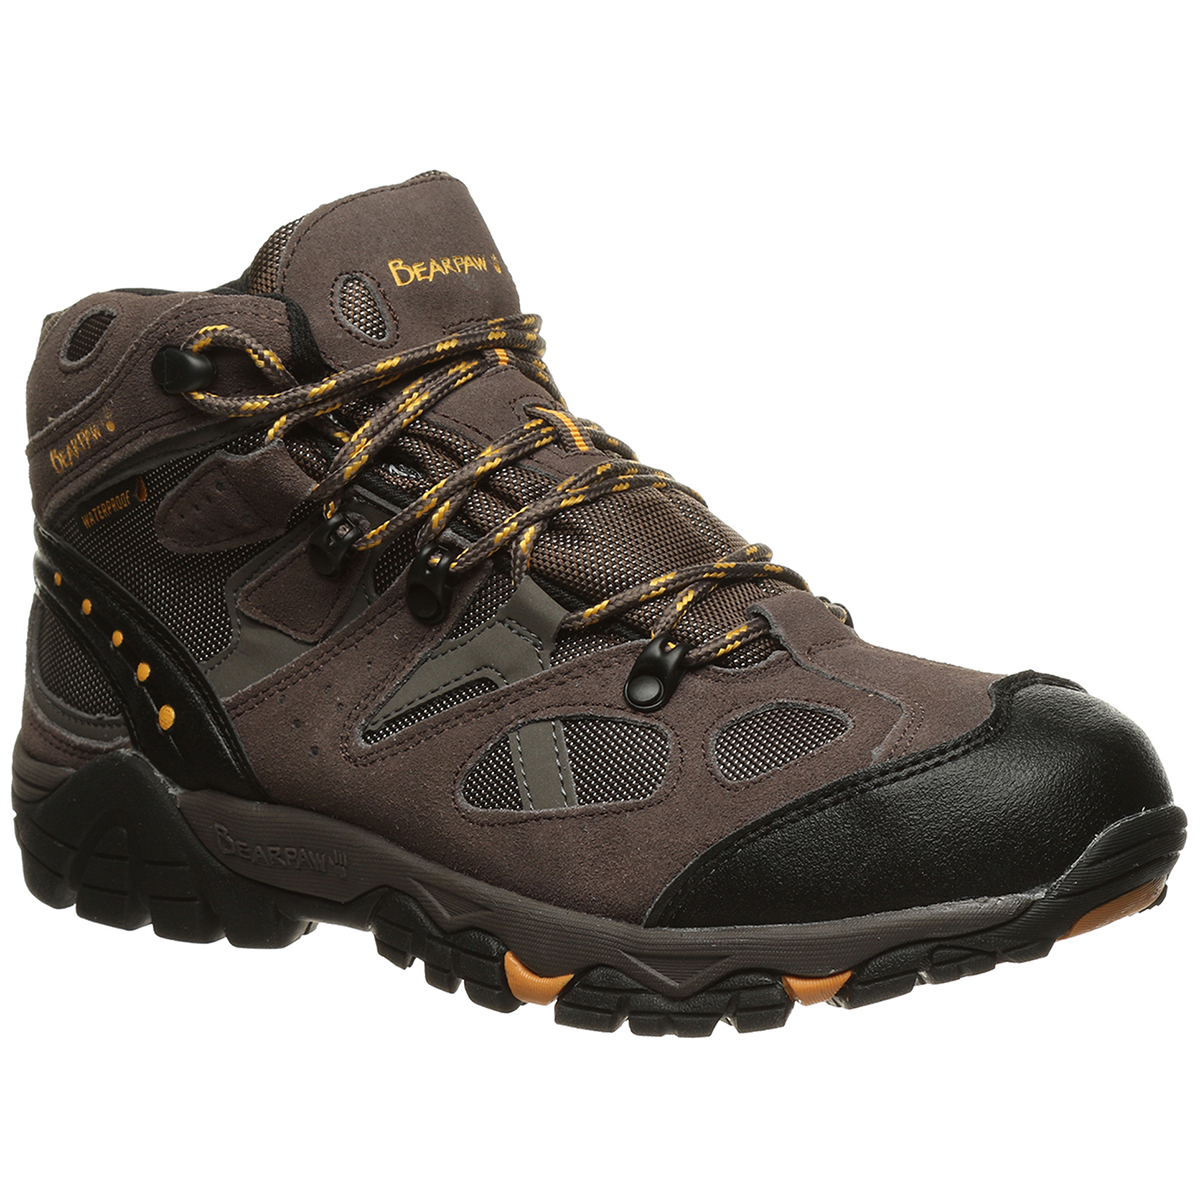 Bearpaw Men's Brock Waterproof Hiking Boots